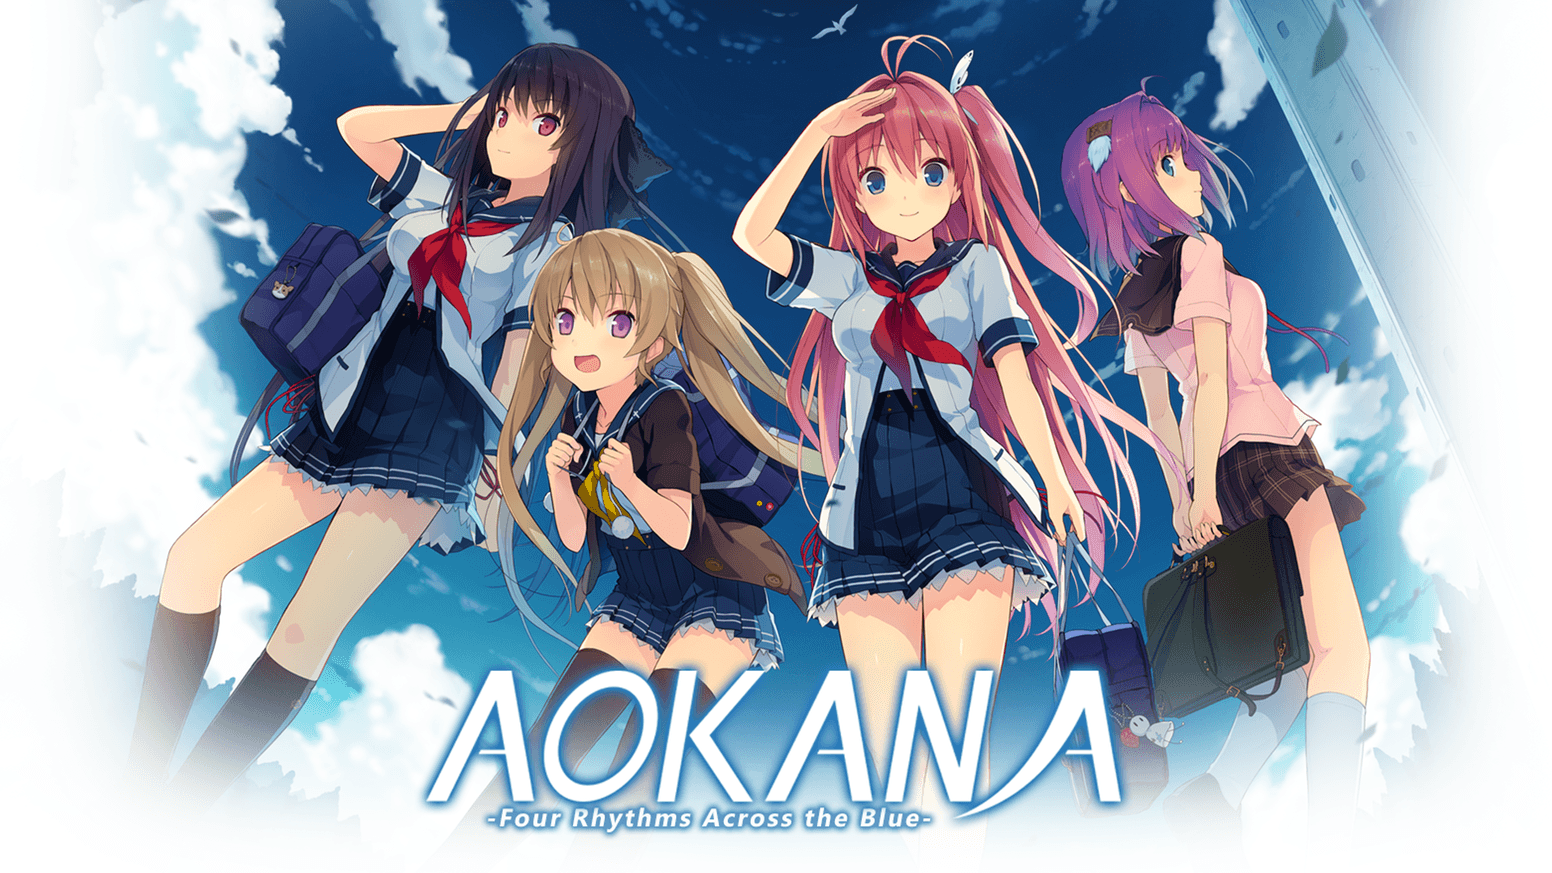 Aokana Physical Kickstarter